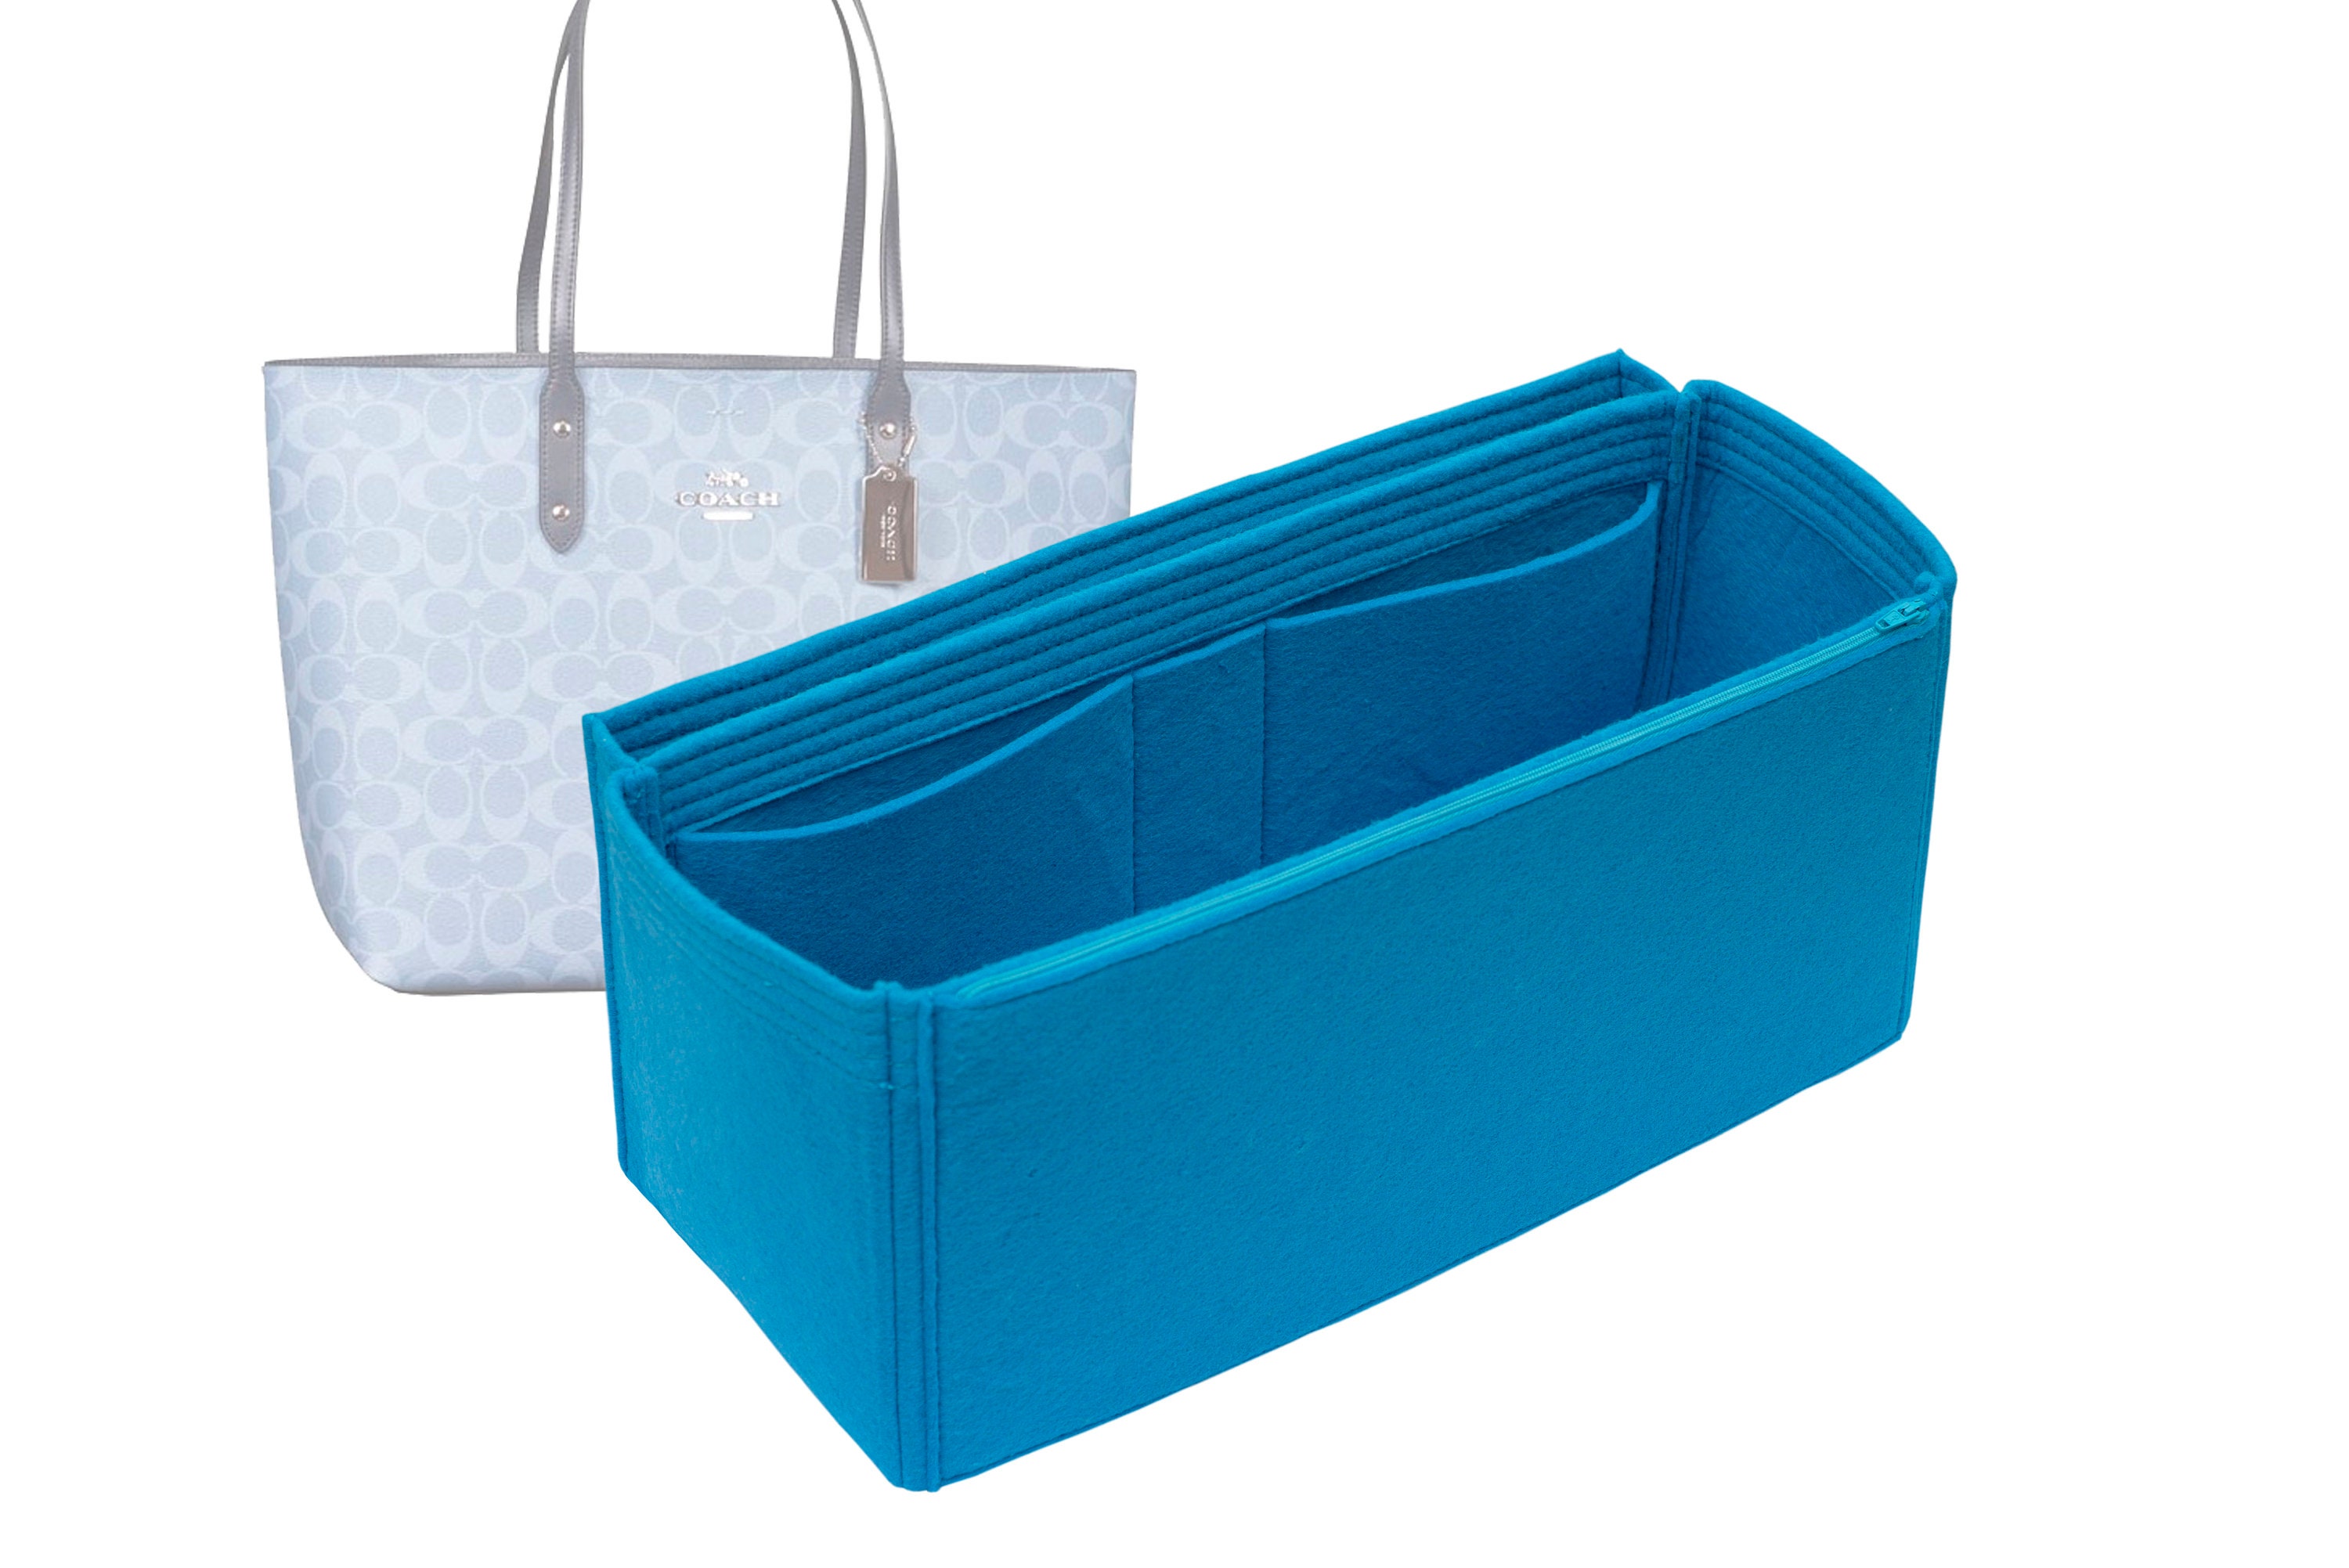 for Maida Hobo Bag -N40369 Bag Insert Organizer, Purse Insert Organizer, Bag Shaper, Bag Liner - Worldwide Shipping 4-6 Days